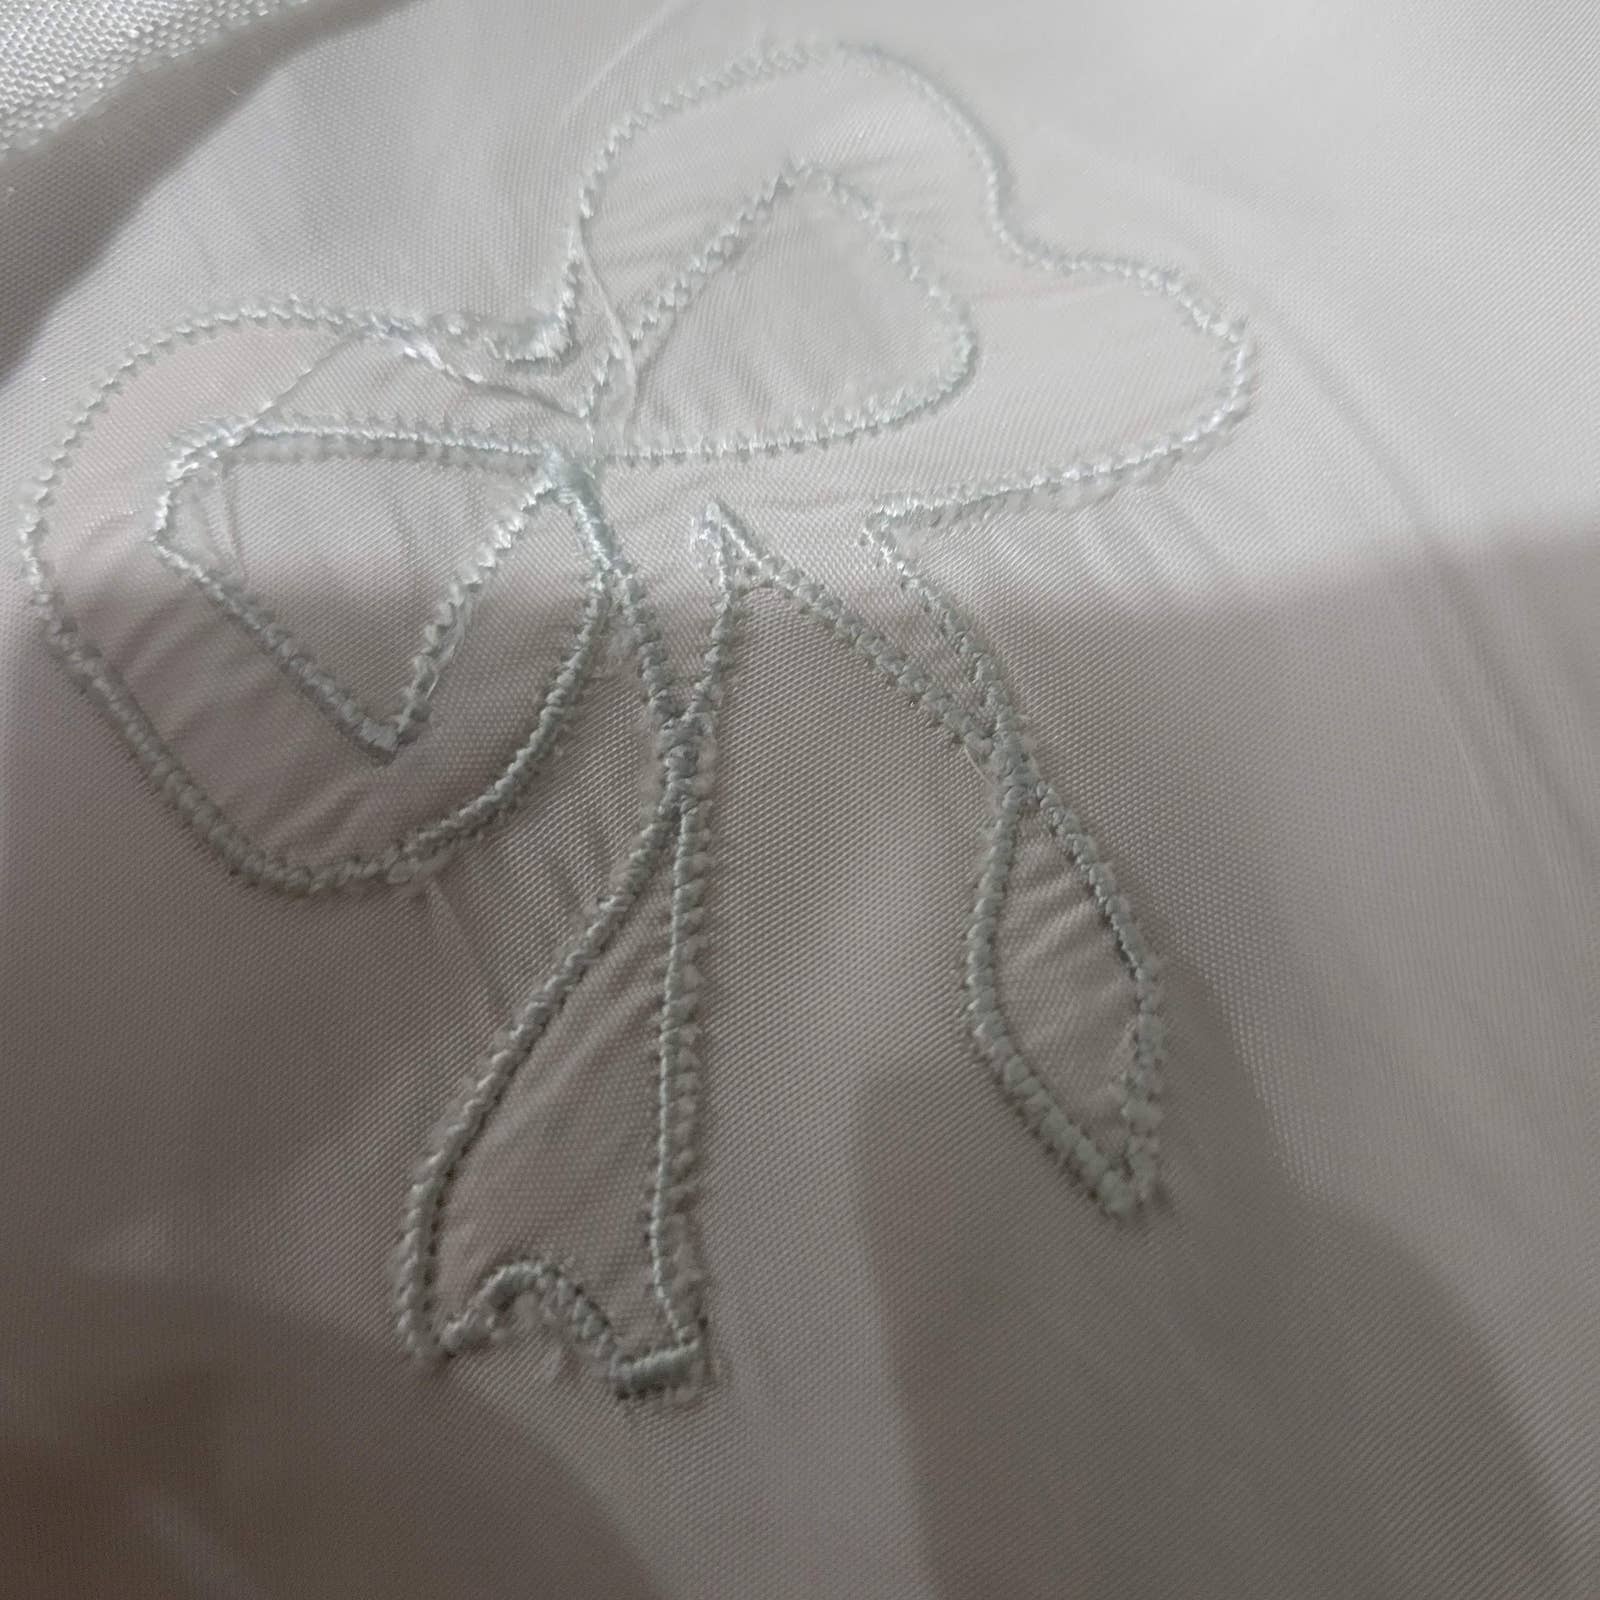 Antique Jrai Bed Jacket White 40s Vintage Retro Glam Nursing Bow Size Small